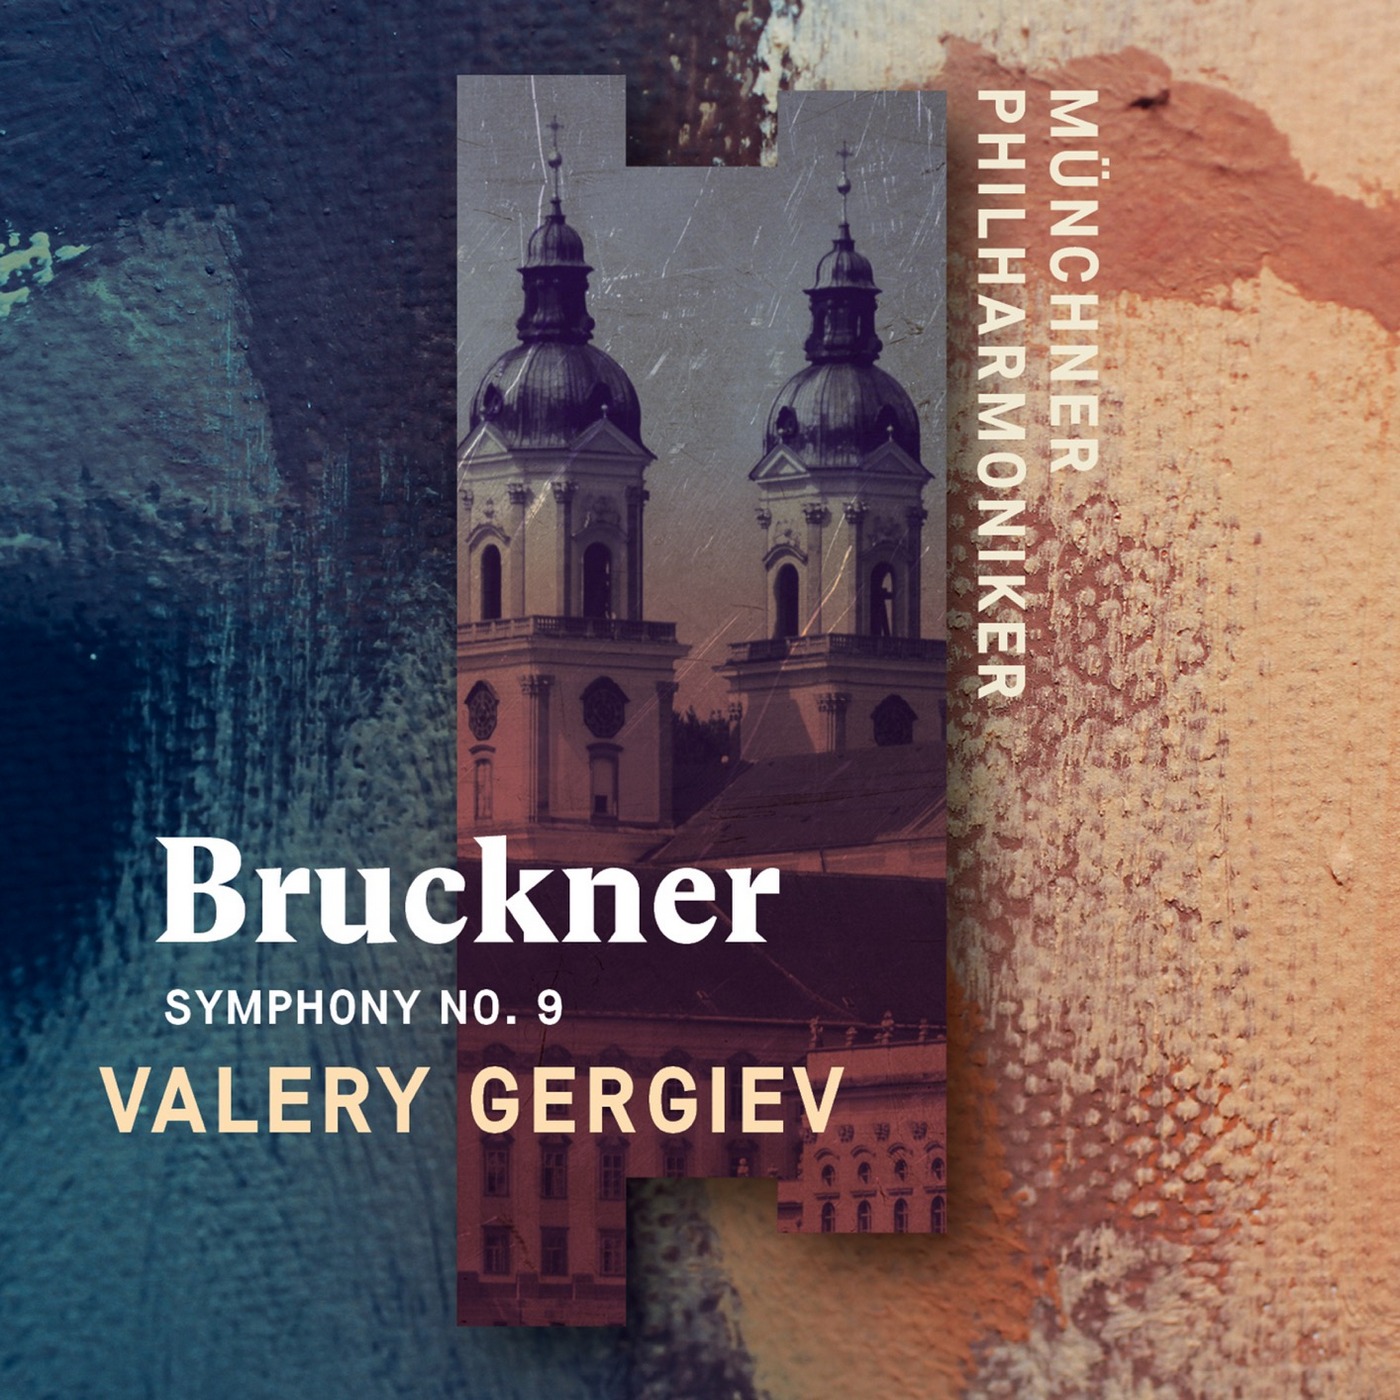 Munchner Philharmoniker & Valery Gergiev – Bruckner: Symphony No. 9 (Live) (2019) [FLAC 24bit/96kHz]